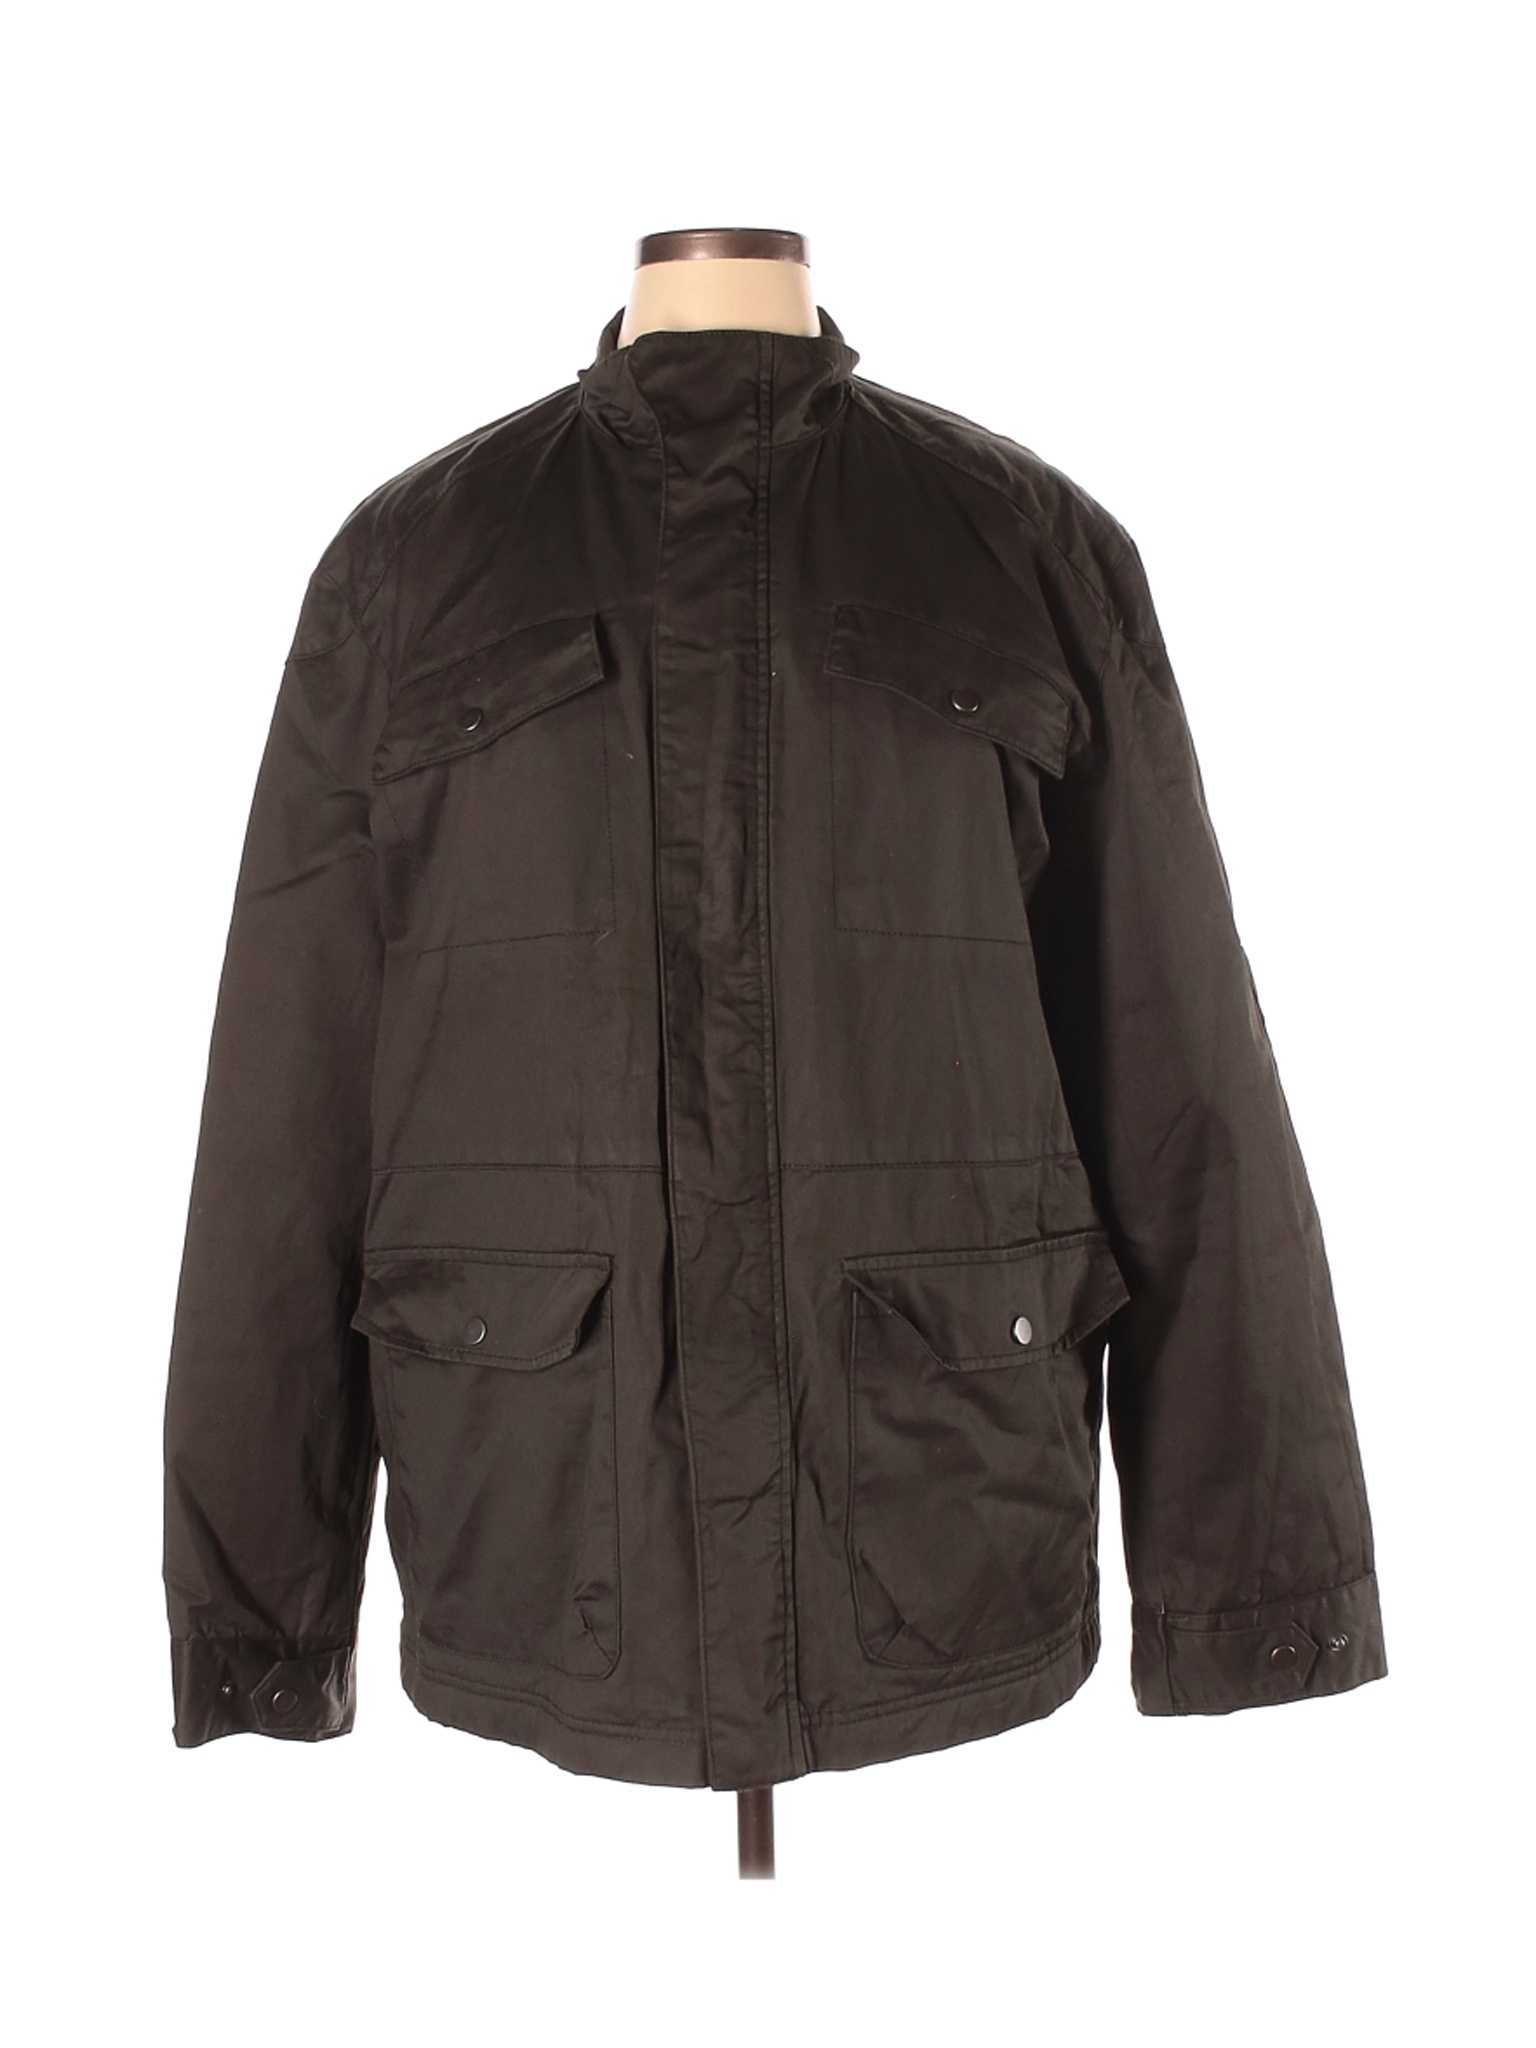 Merona Women Brown Jacket XL | eBay